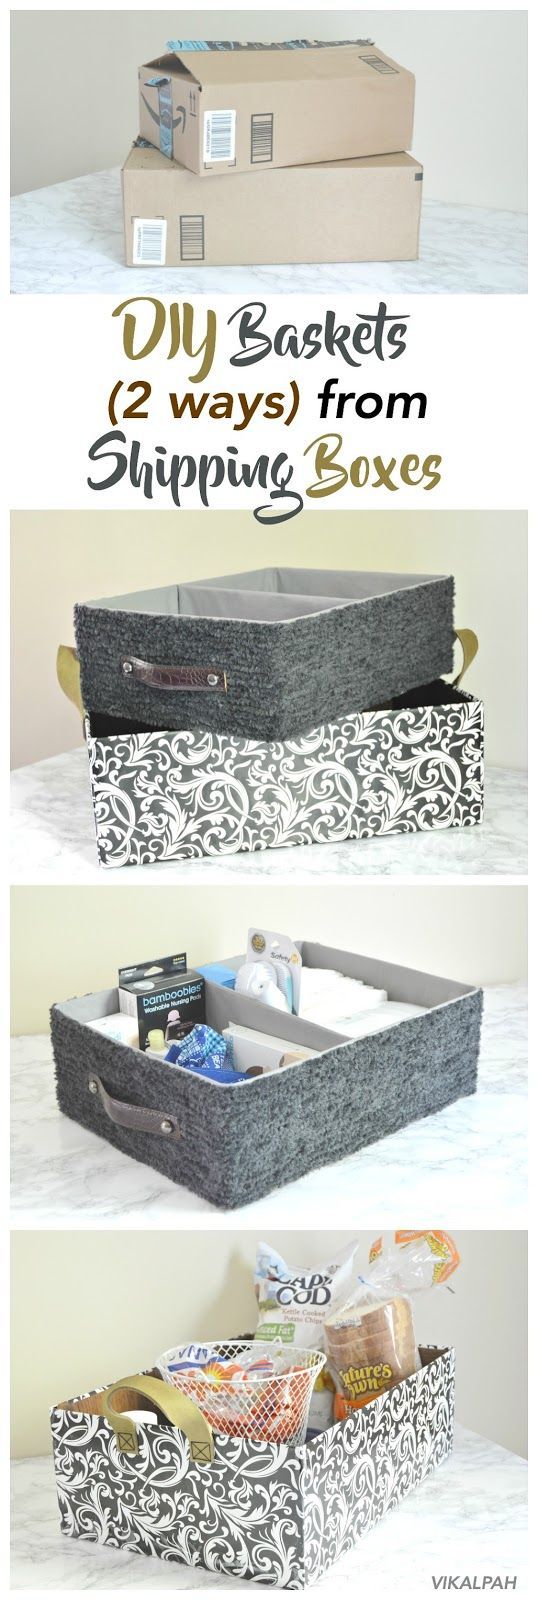 DIY Baskets (2 ways) from Shipping boxes - DIY Baskets (2 ways) from Shipping boxes -   18 diy Box recycle ideas